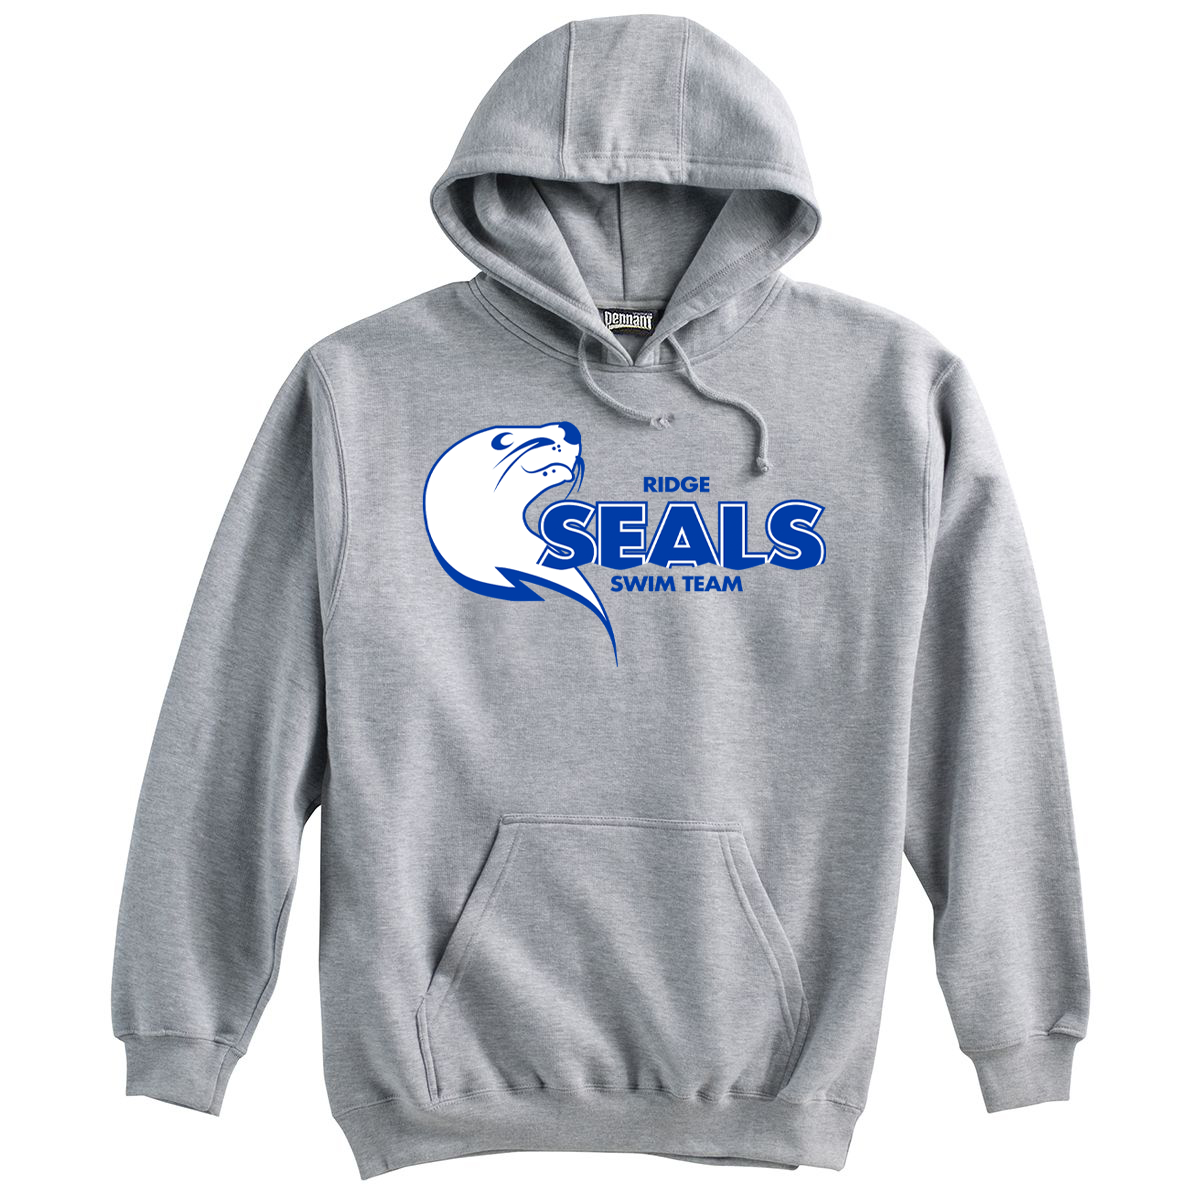 Ridge Seals Swim Team Sweatshirt